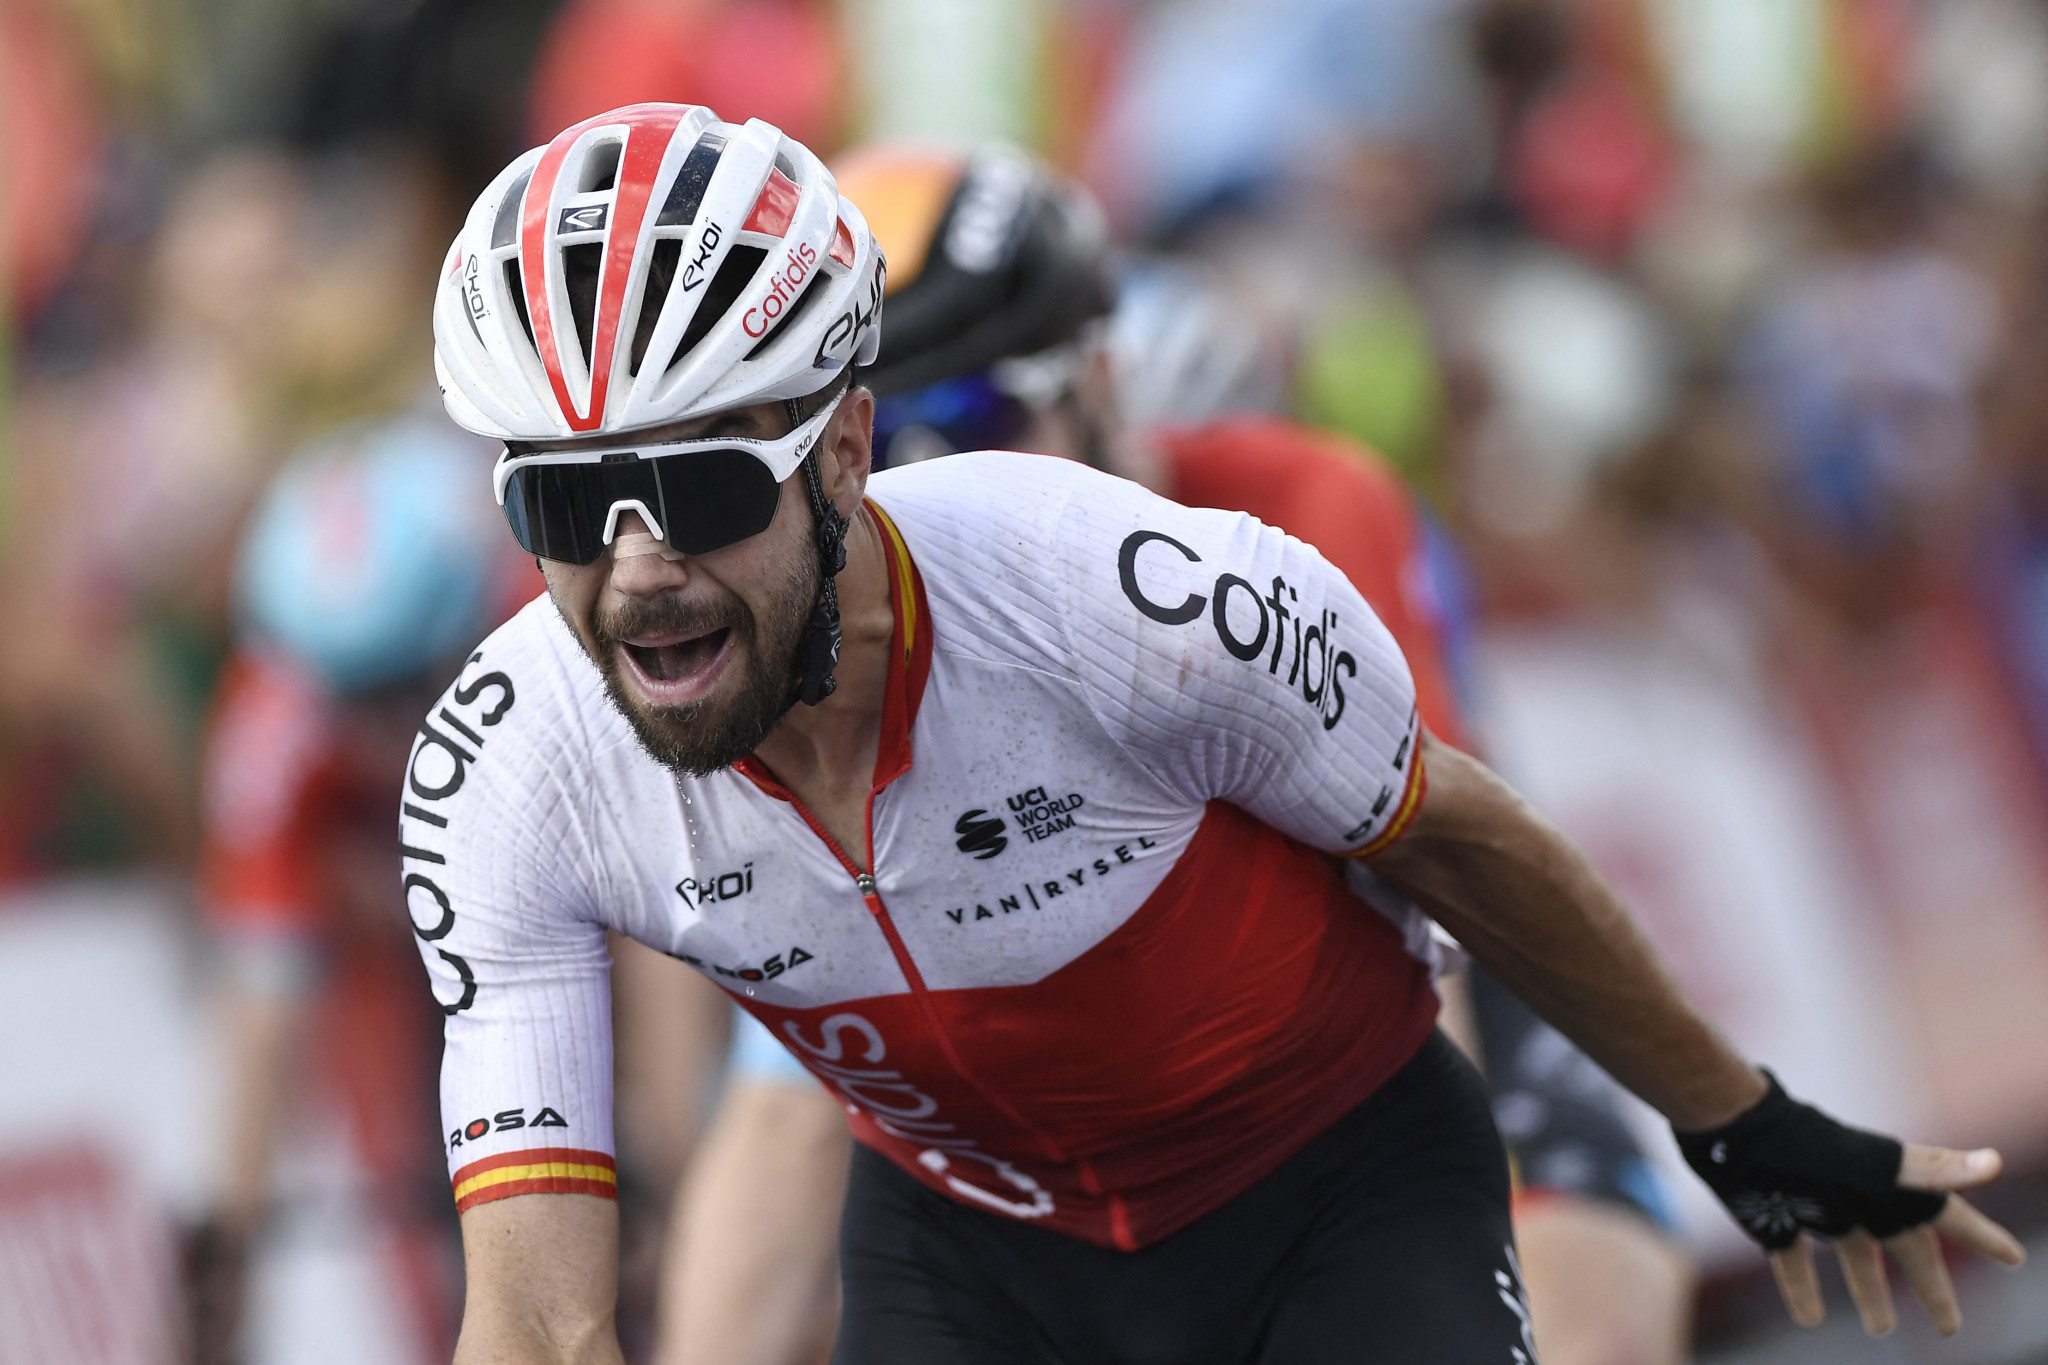 Herrada masters breakaway to claim stage seven win at Vuelta a España